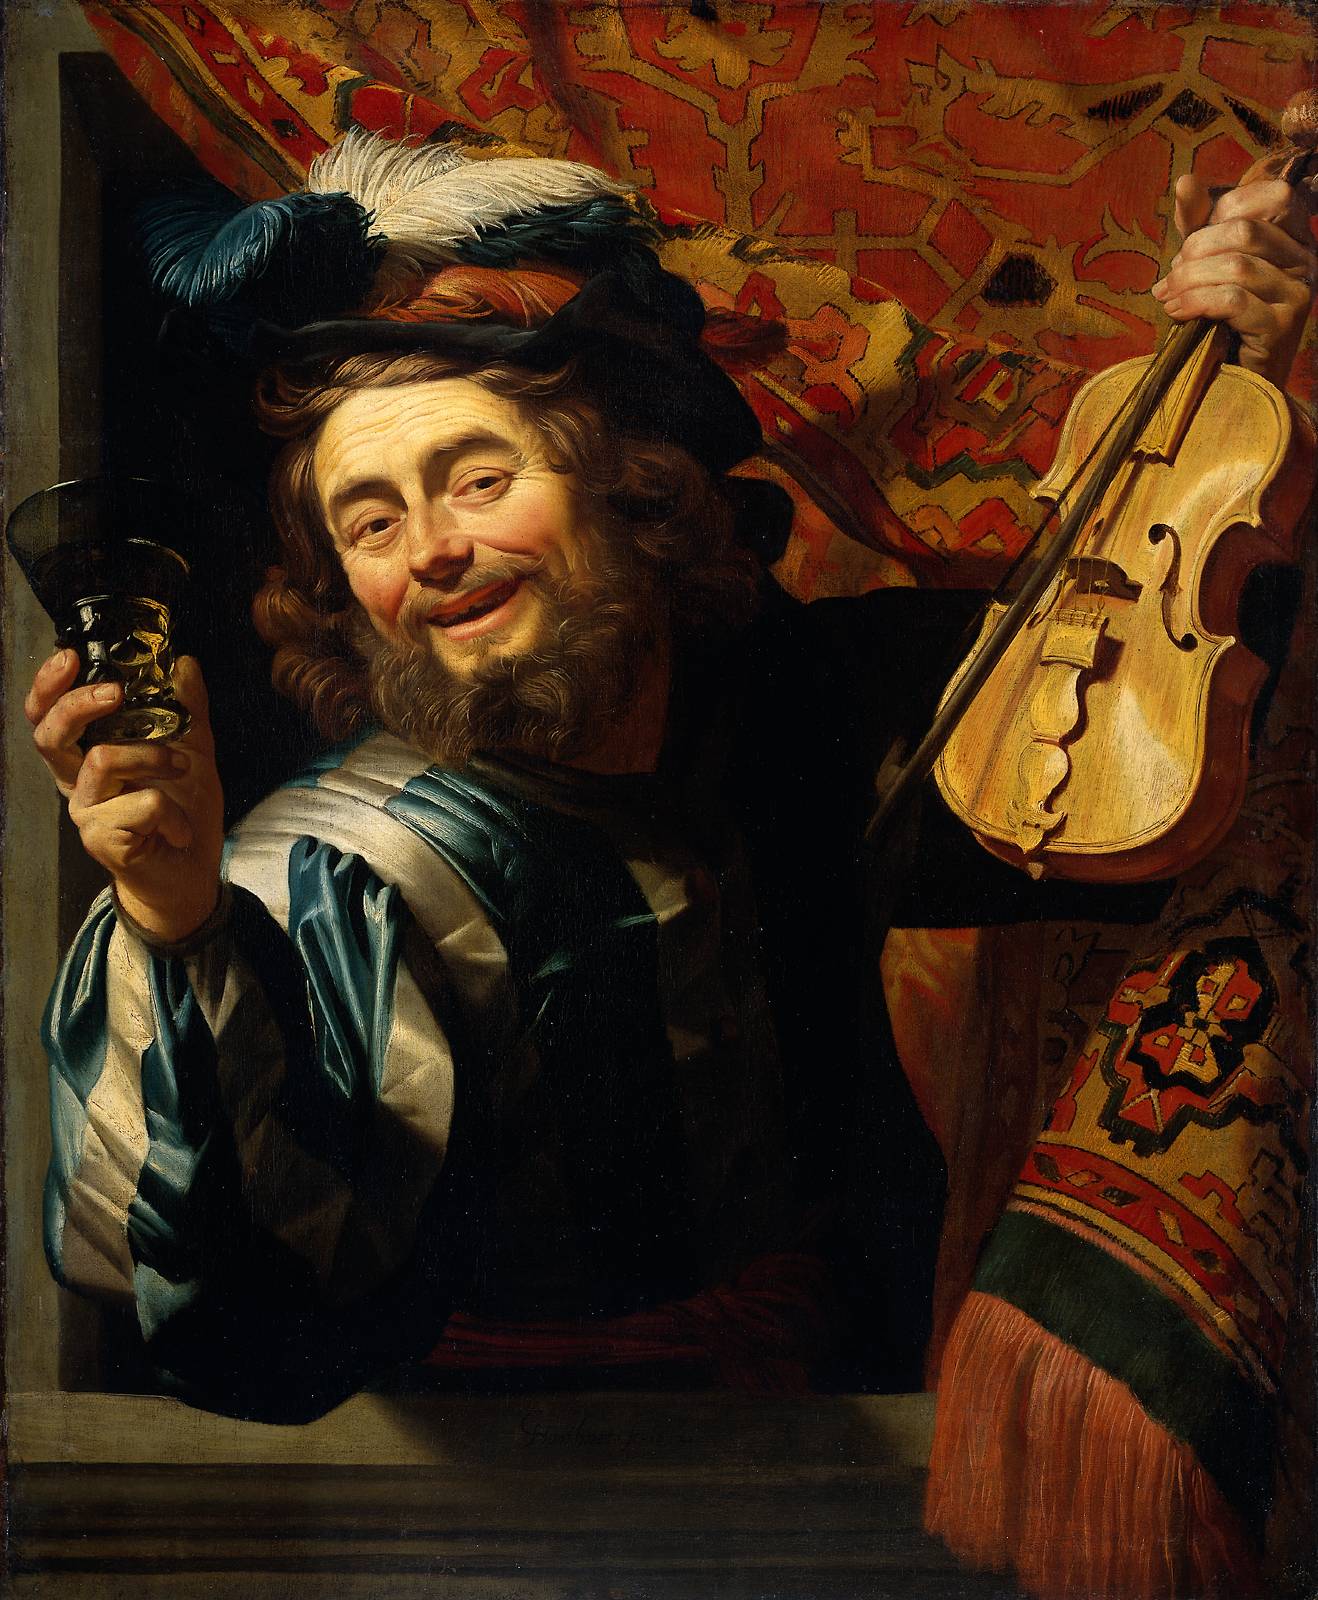 El Alegre Violinista by Gerard van Honthorst - 1623 - 107.2 x 88.3 cm Rijksmuseum